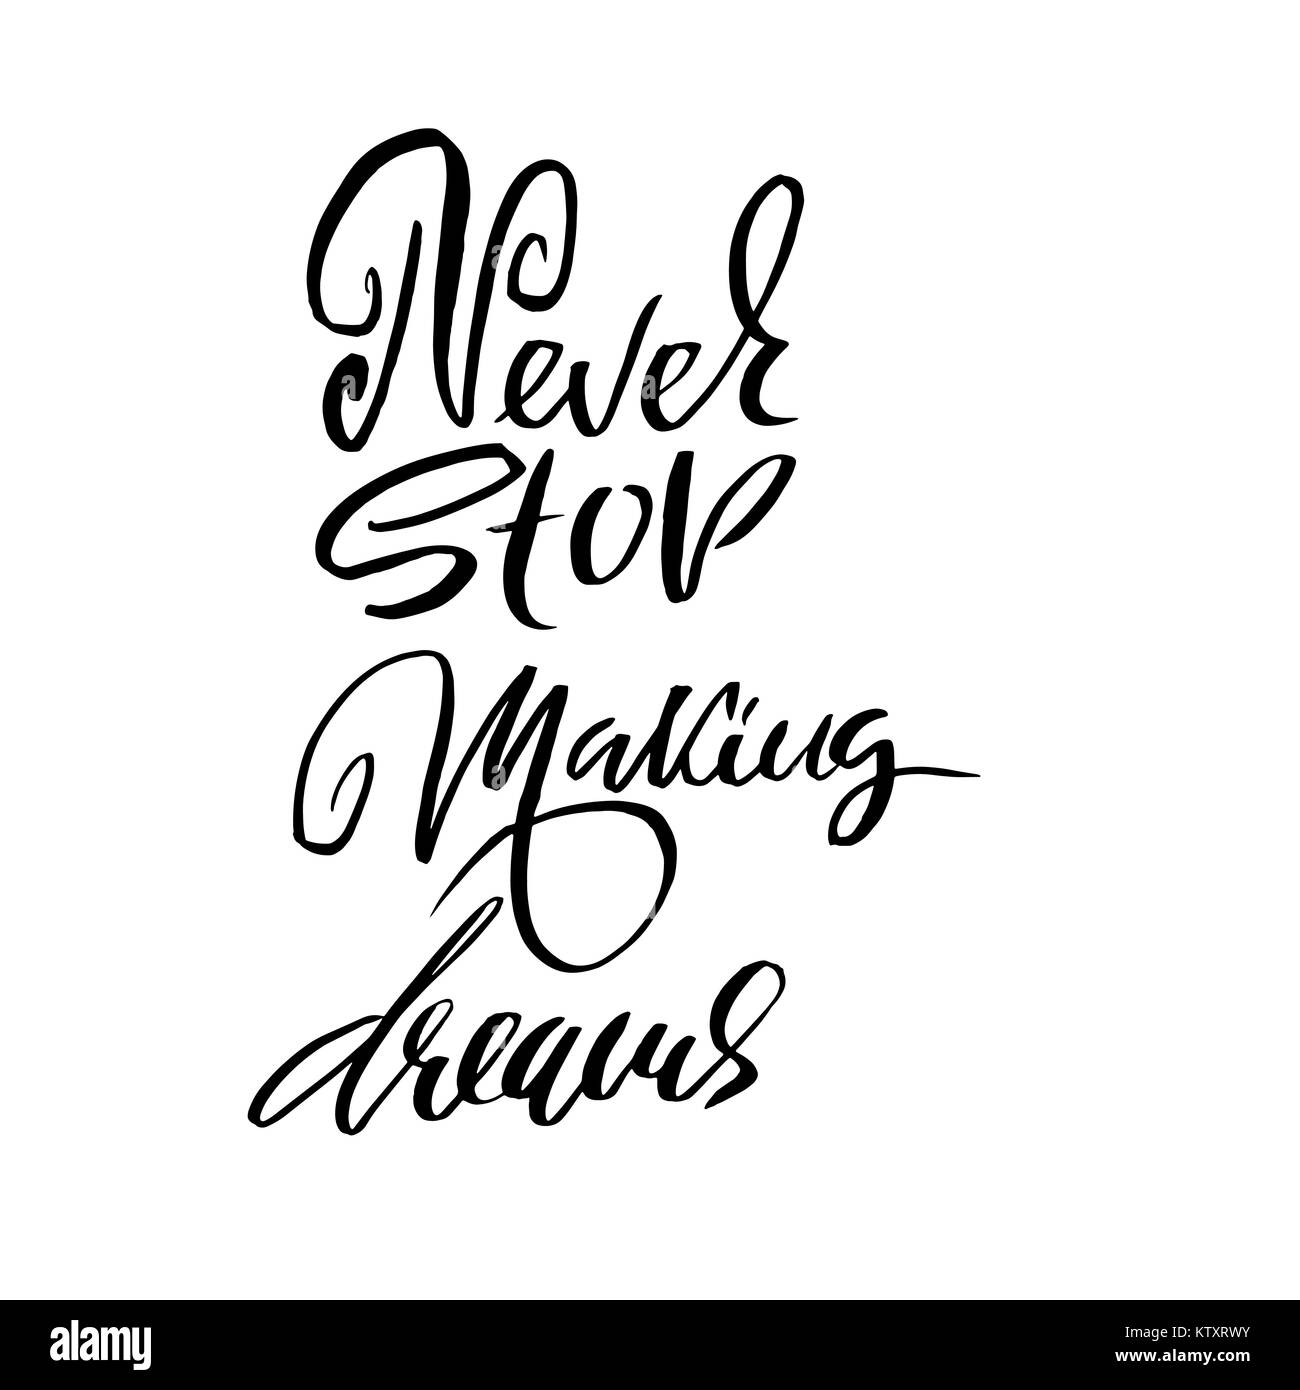 Never stop making dreams. Hand drawn dry brush lettering. Ink illustration. Modern calligraphy phrase. Vector illustration. Stock Vector